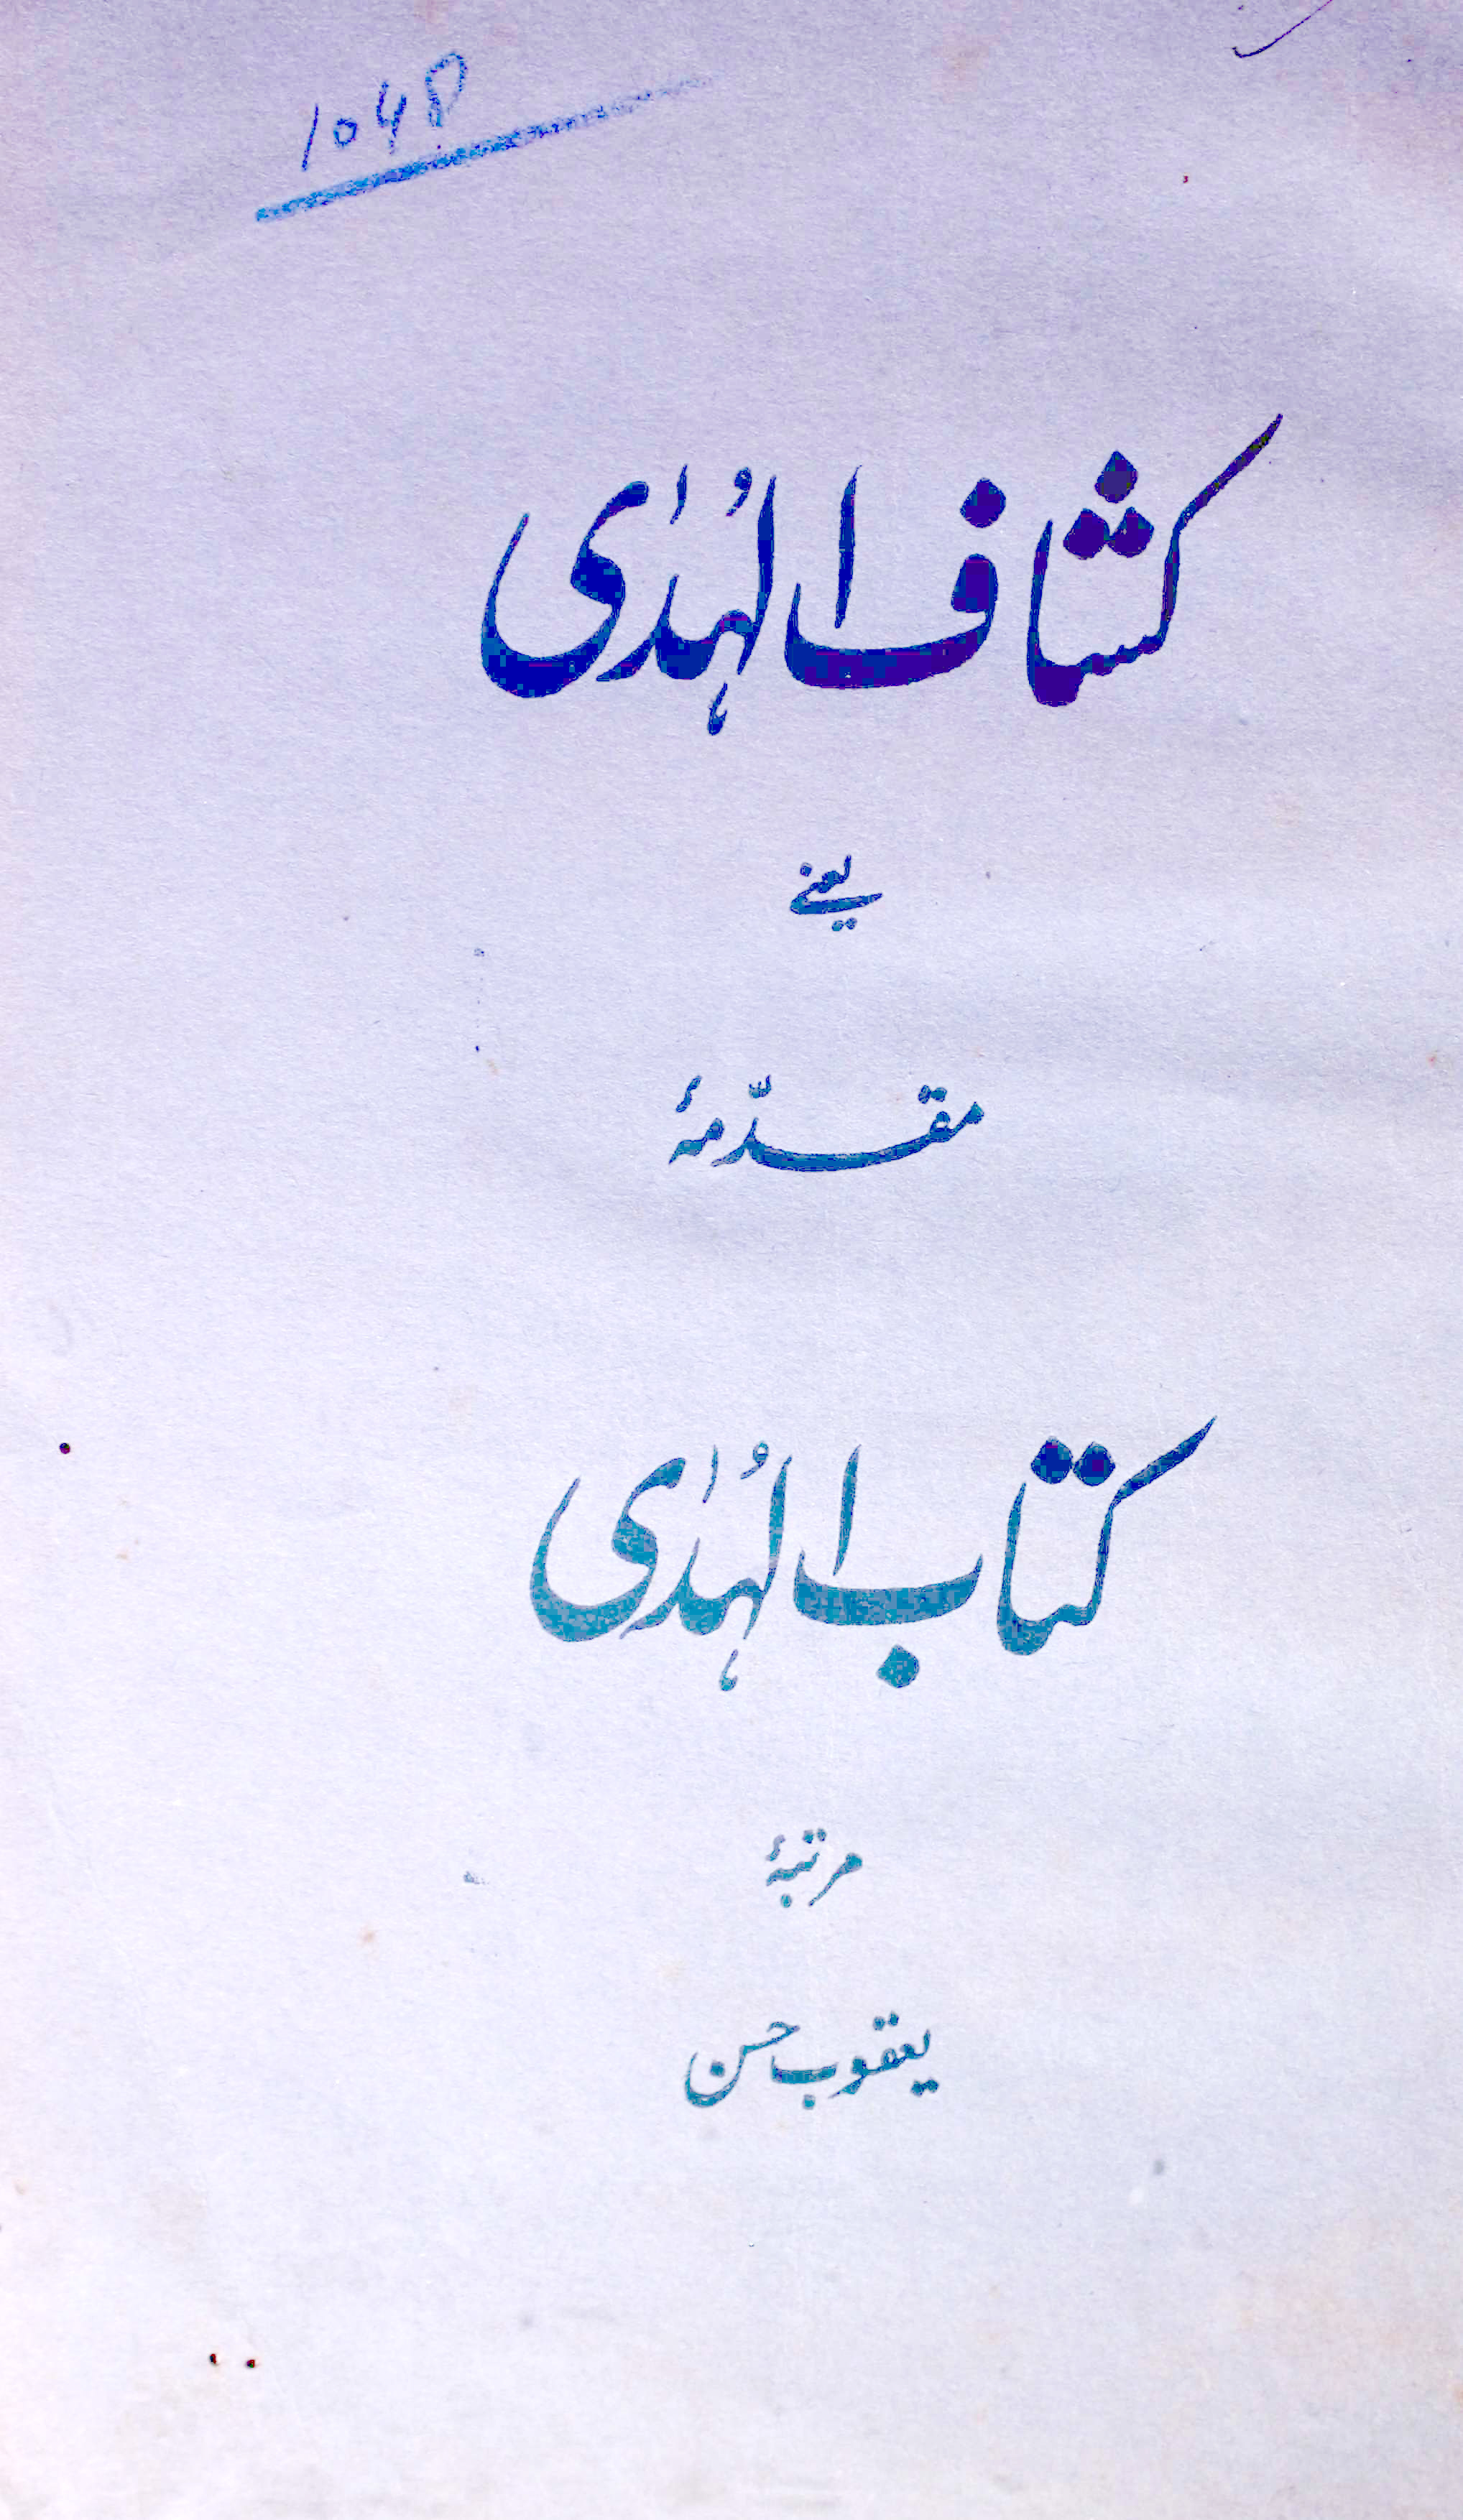 Kashaf-ul-Huda